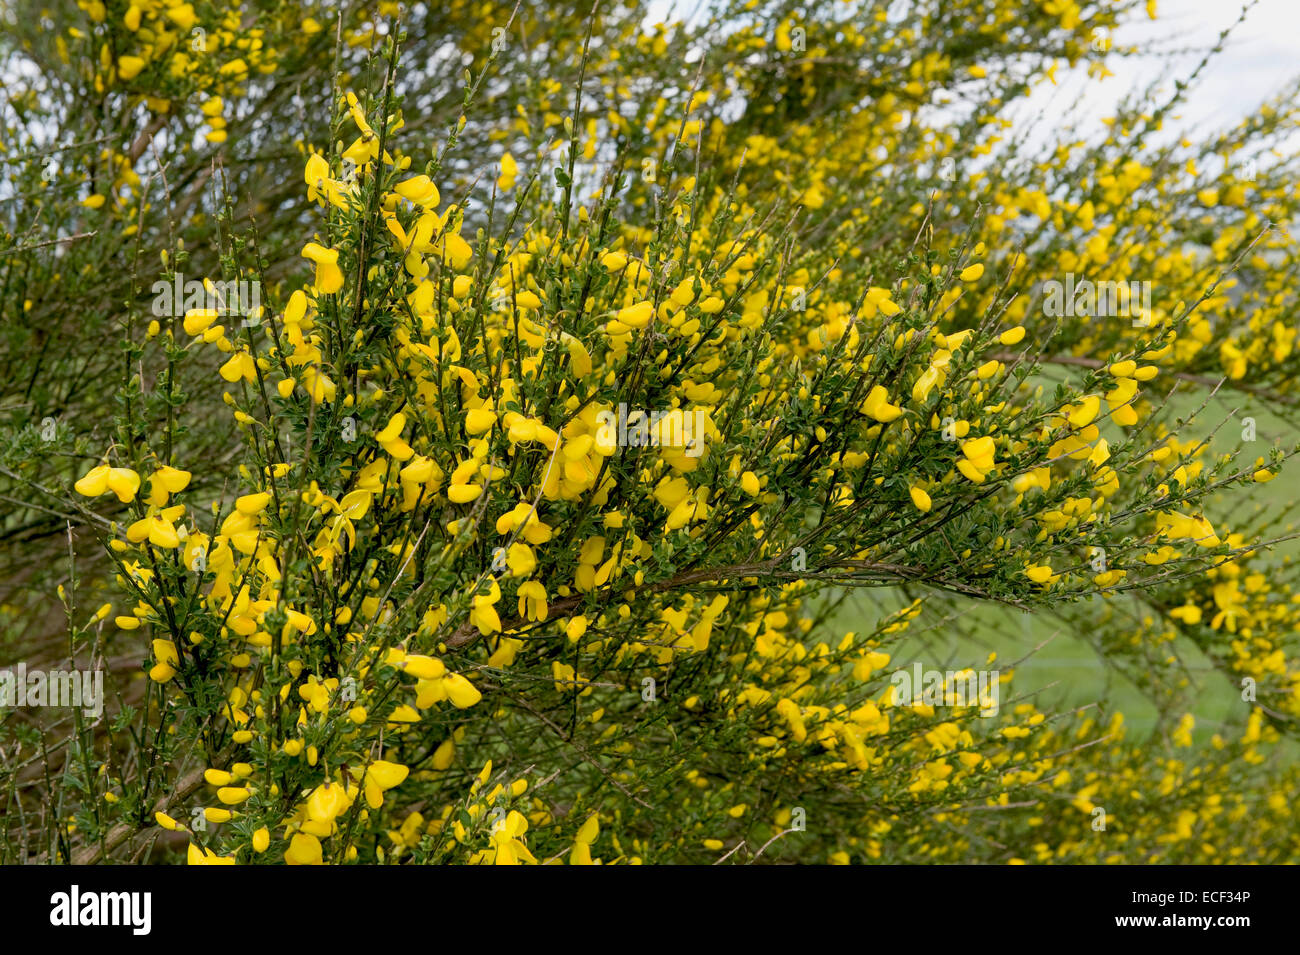 Comunes o scotch broom, Cytisus scoparius, arbustos florecientes, Berkshire, Mayo Foto de stock